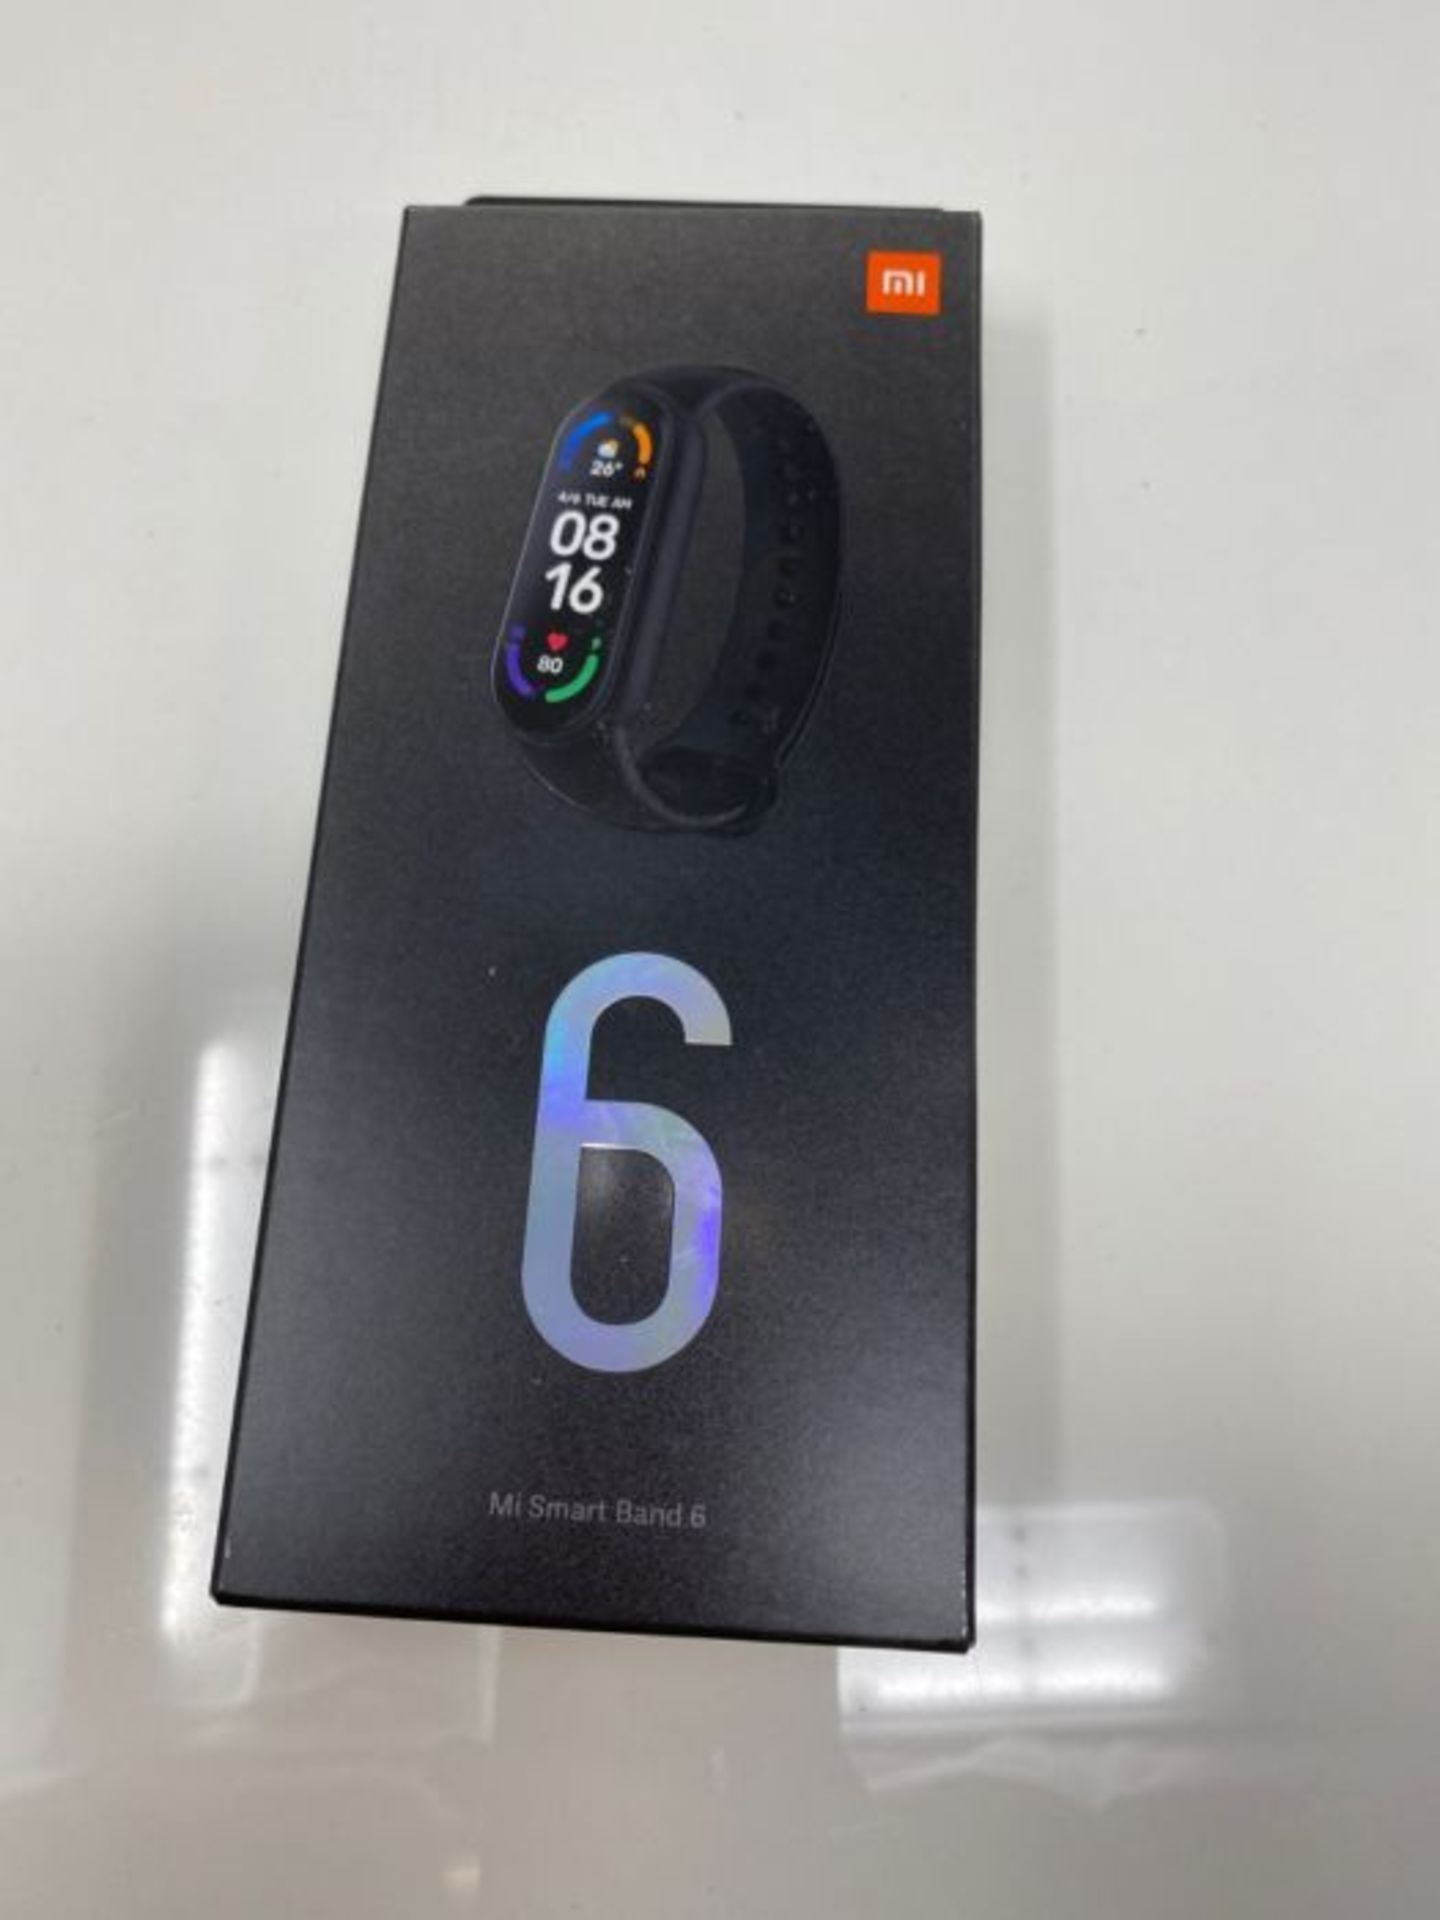 Xiaomi Mi Smart Band 6 - 1.56'' AMOLED Touch Screen, SPO2, Sleep Breathing Tracking, 5 - Image 2 of 3